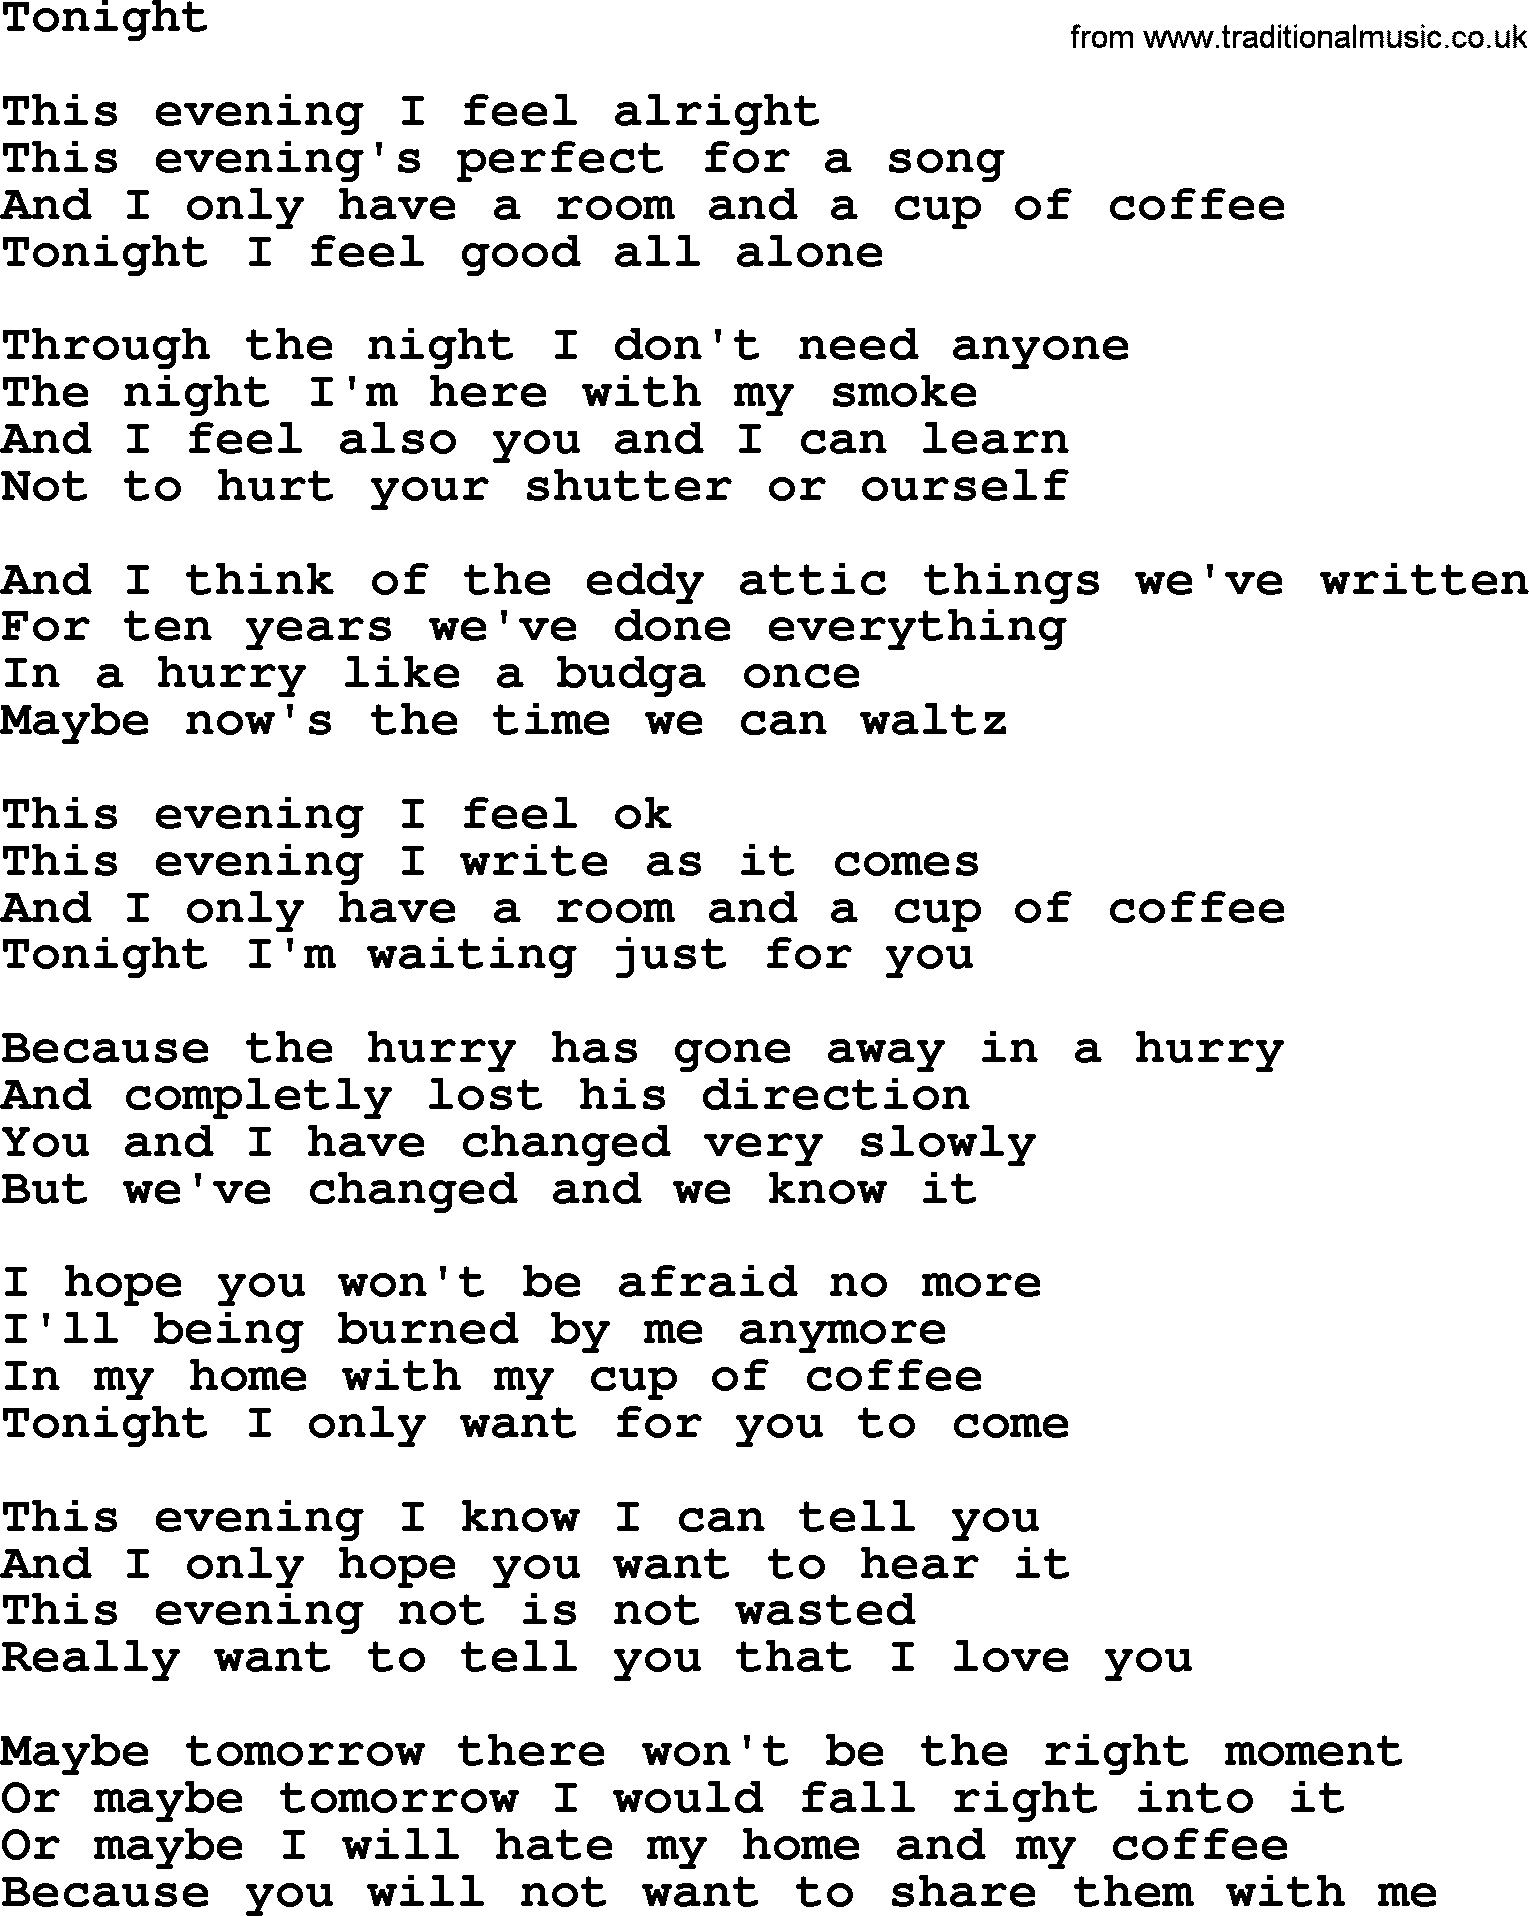 The Byrds song Tonight, lyrics